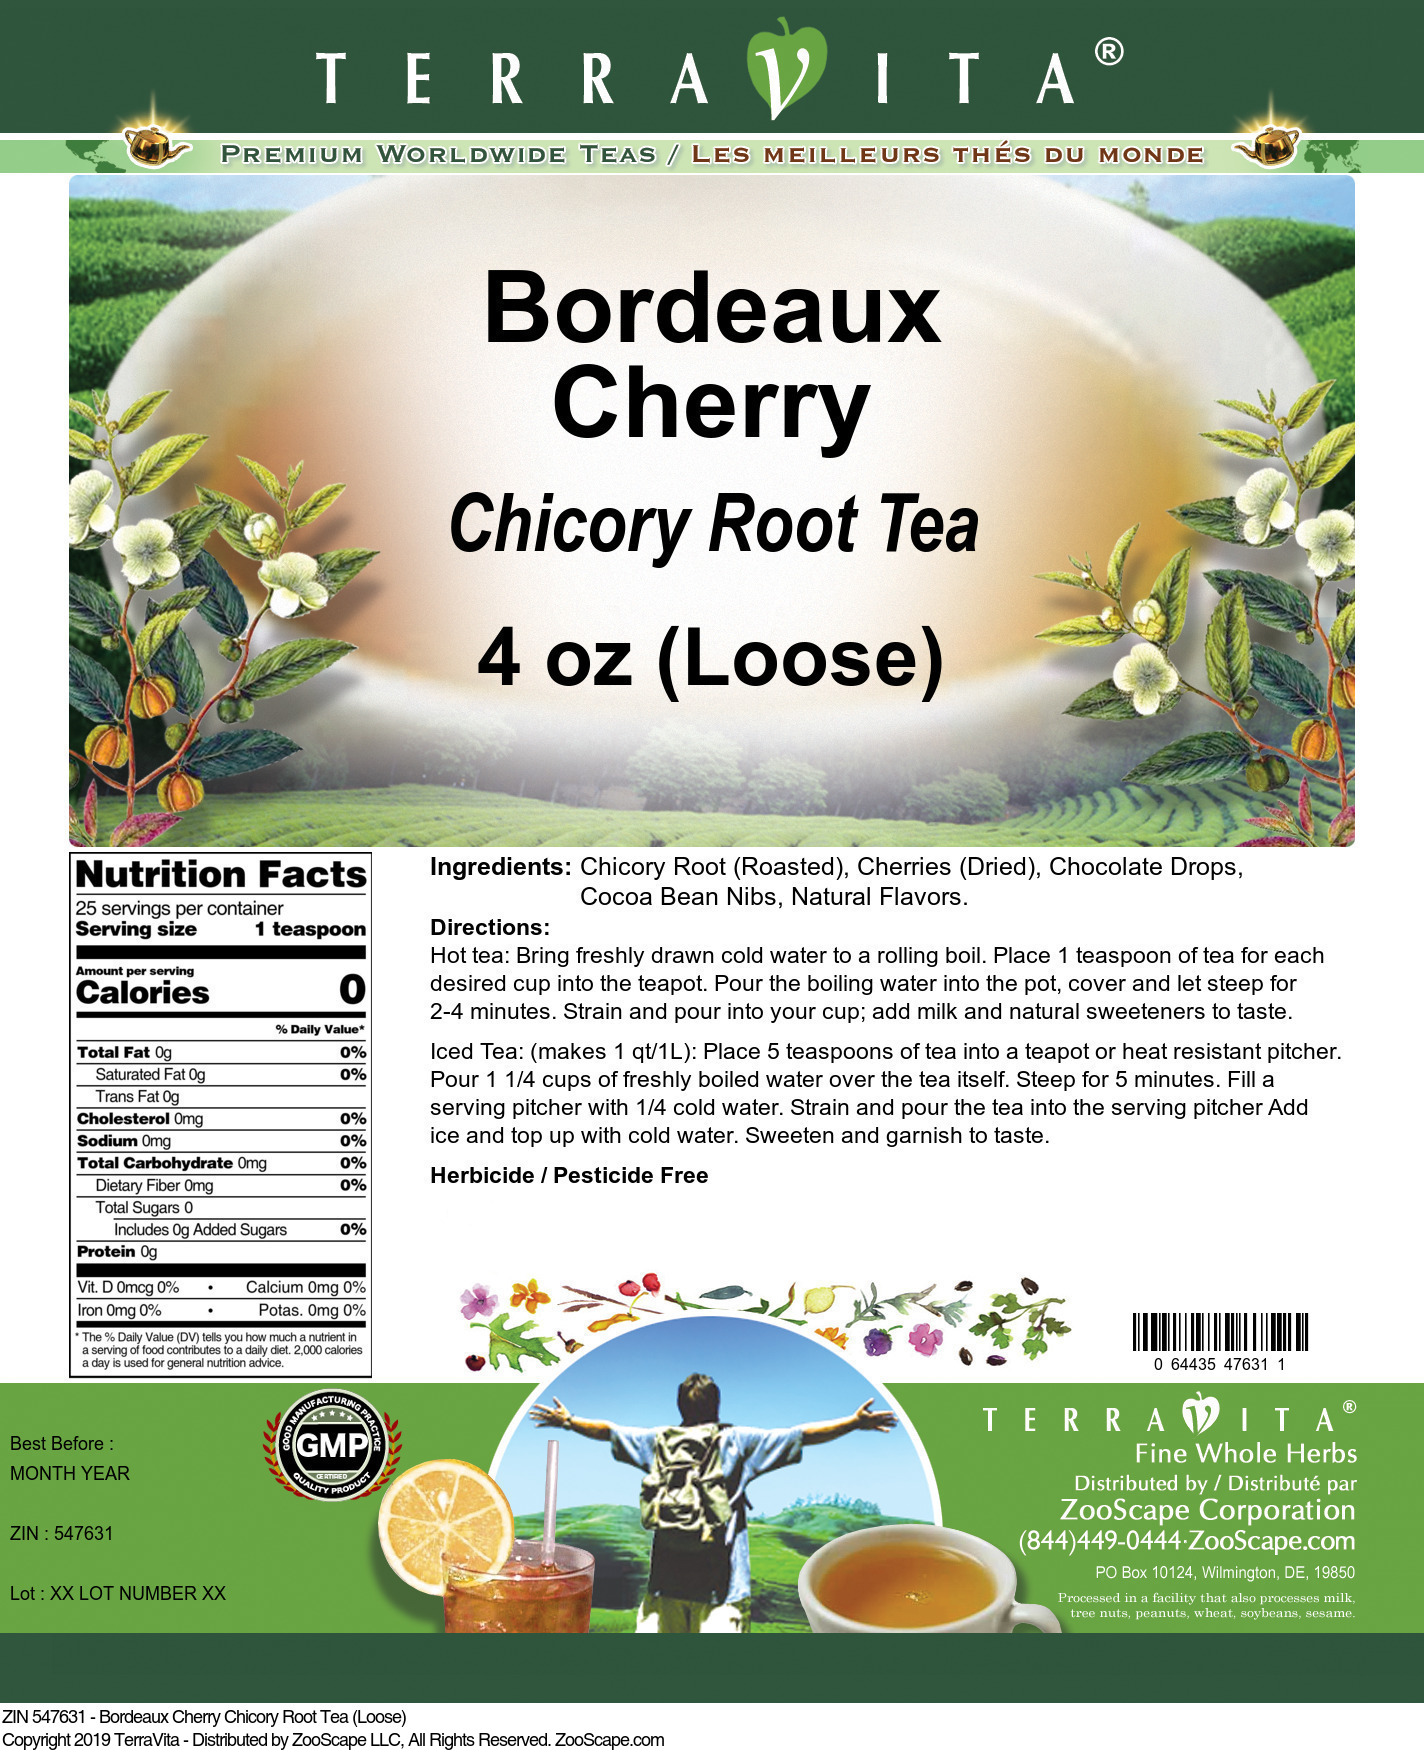 Bordeaux Cherry Chicory Root Tea (Loose) - Label